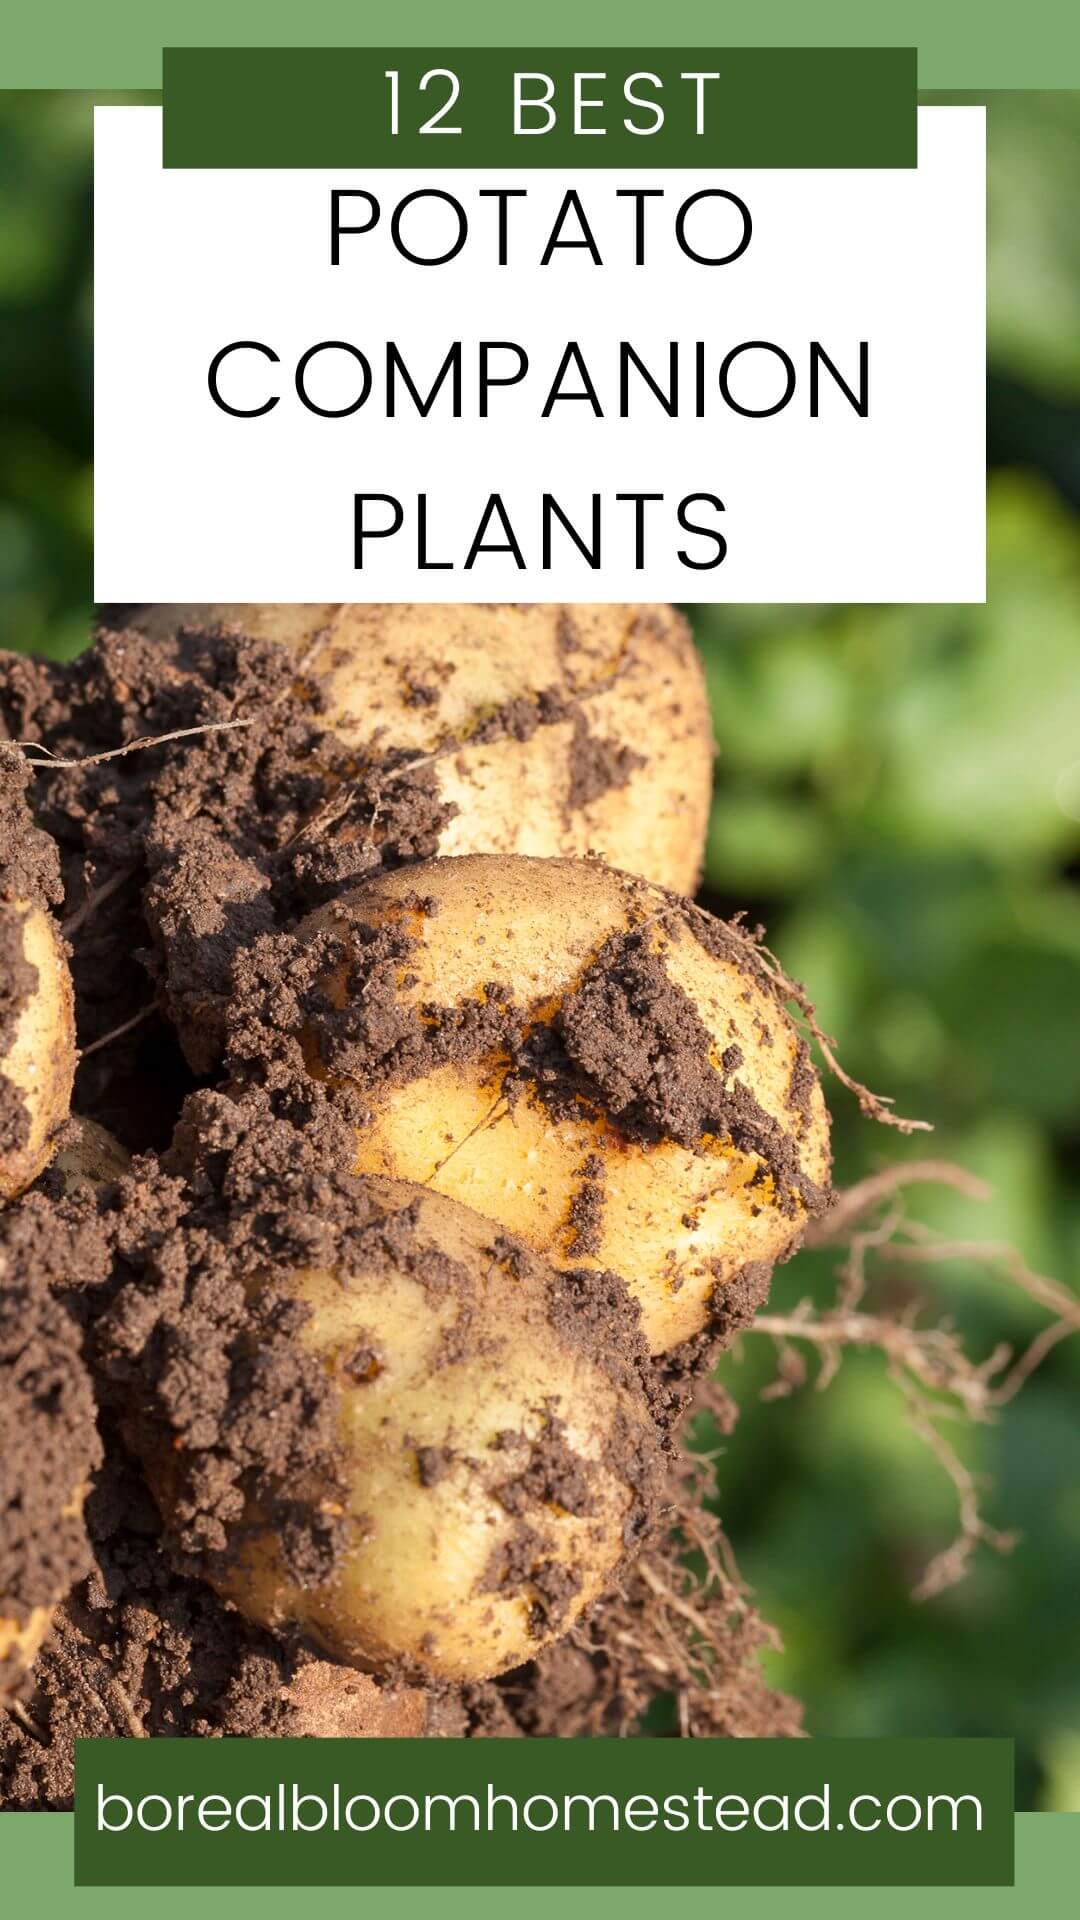 Potato companion plants pinterest graphic.